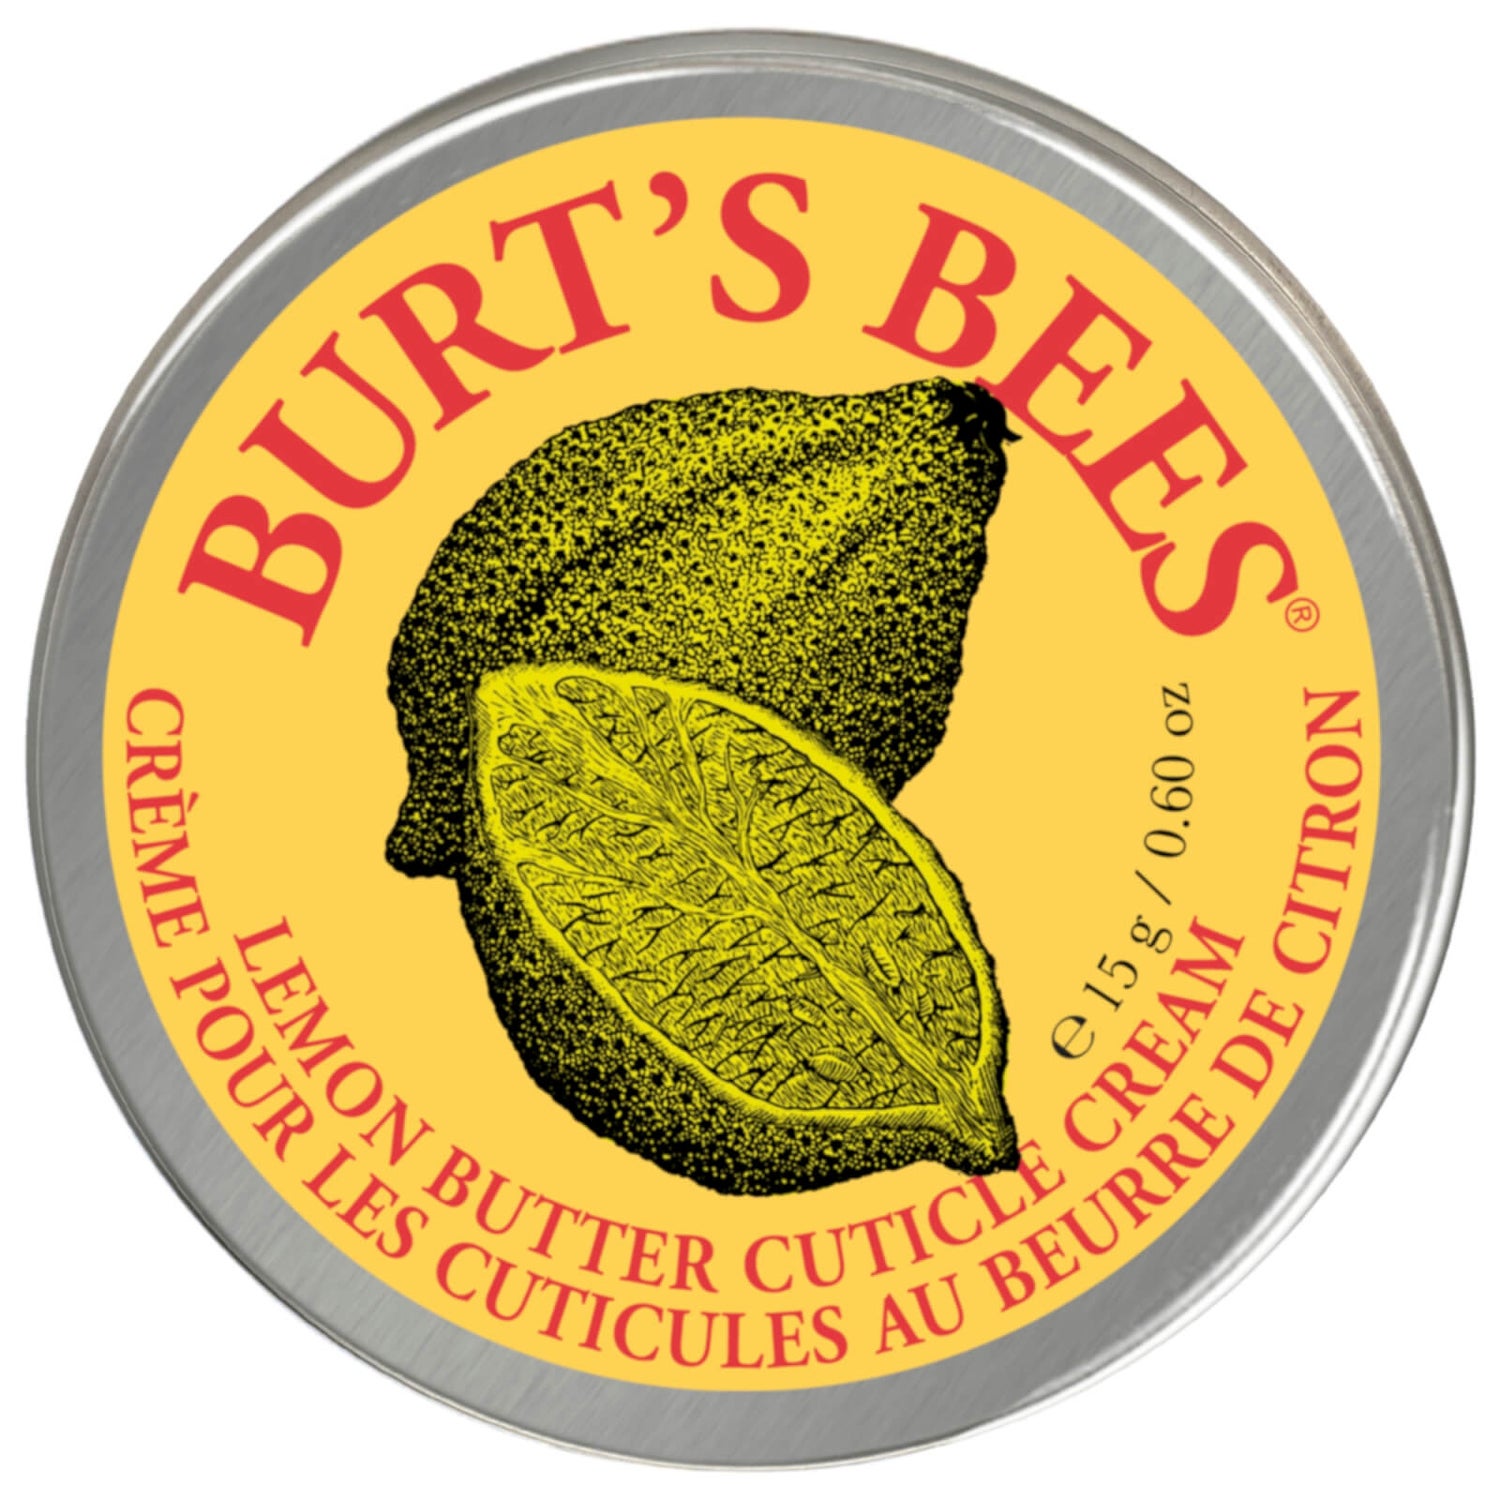 Burt's Bees レモン バター キューティクル クリーム(15g)